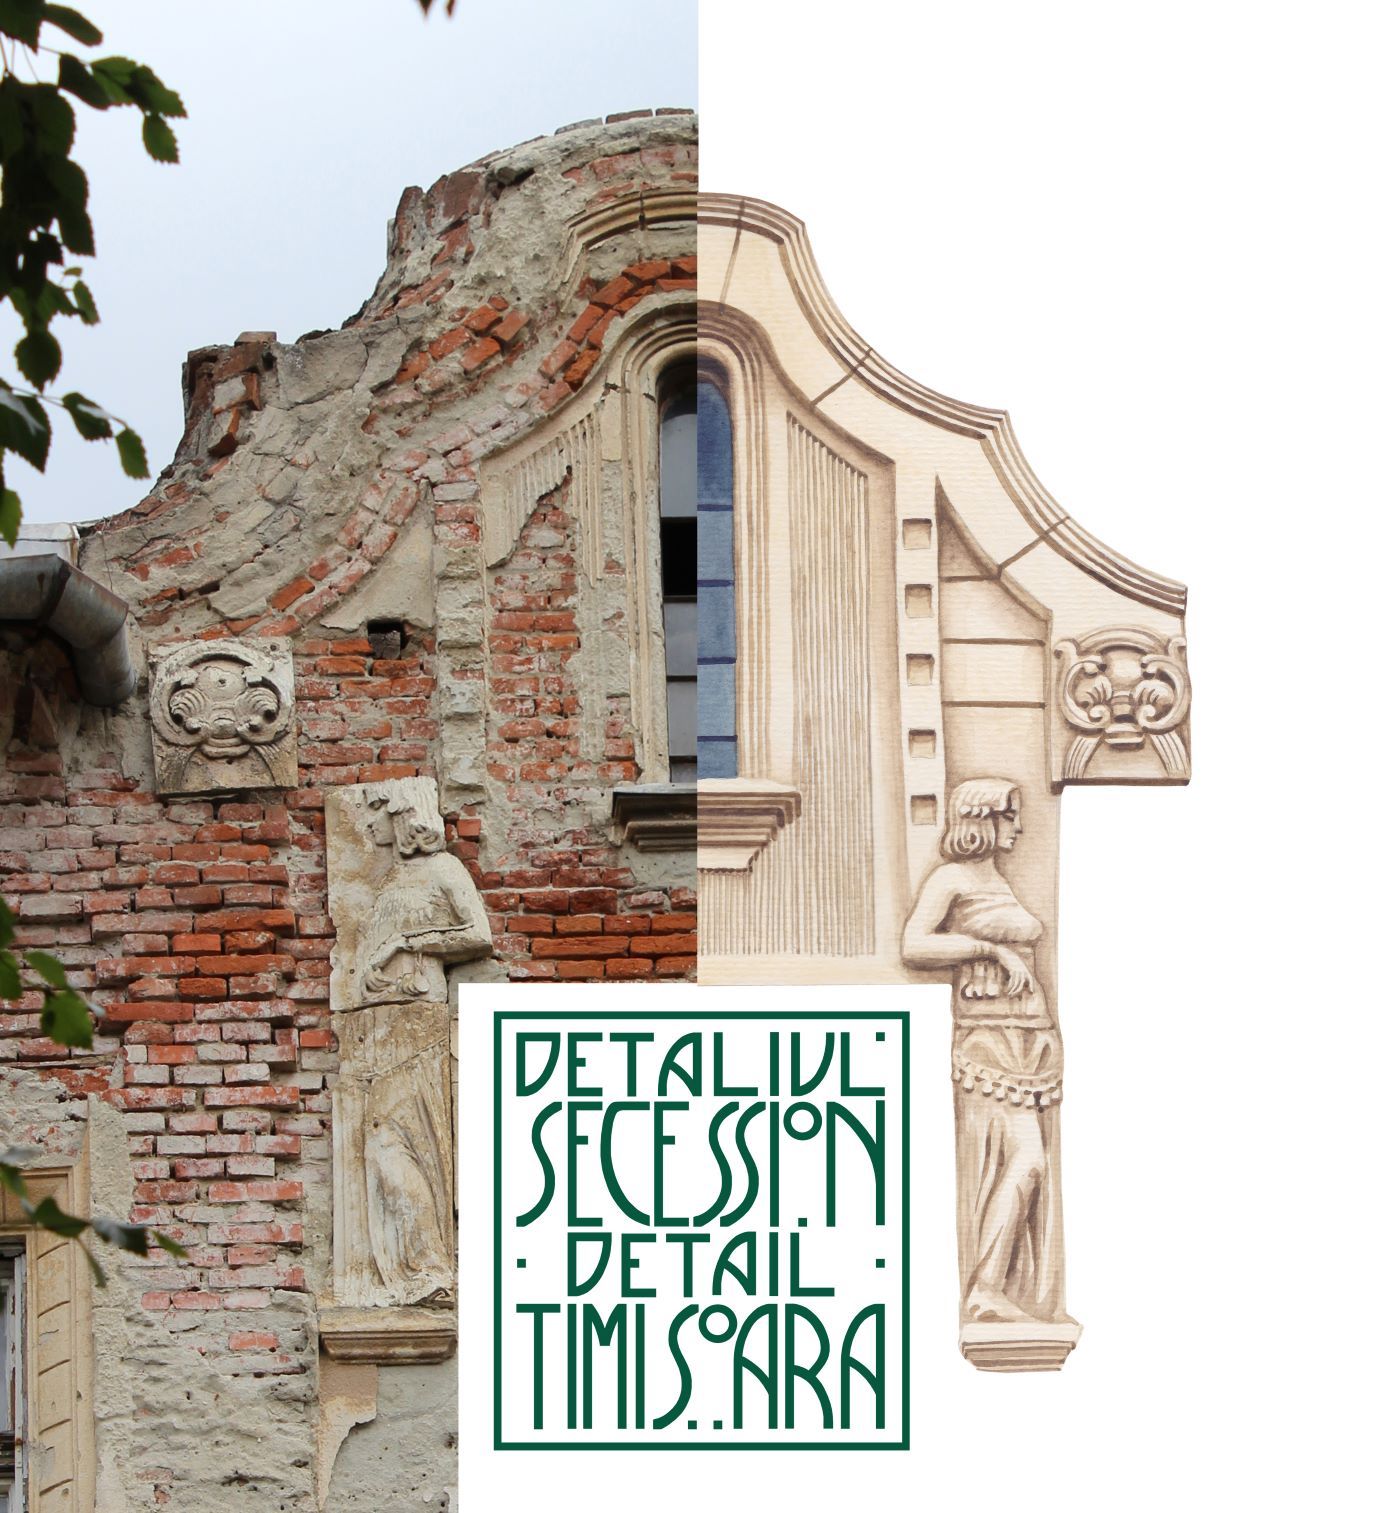 Detaliul Secession - Timisoara 2021 2